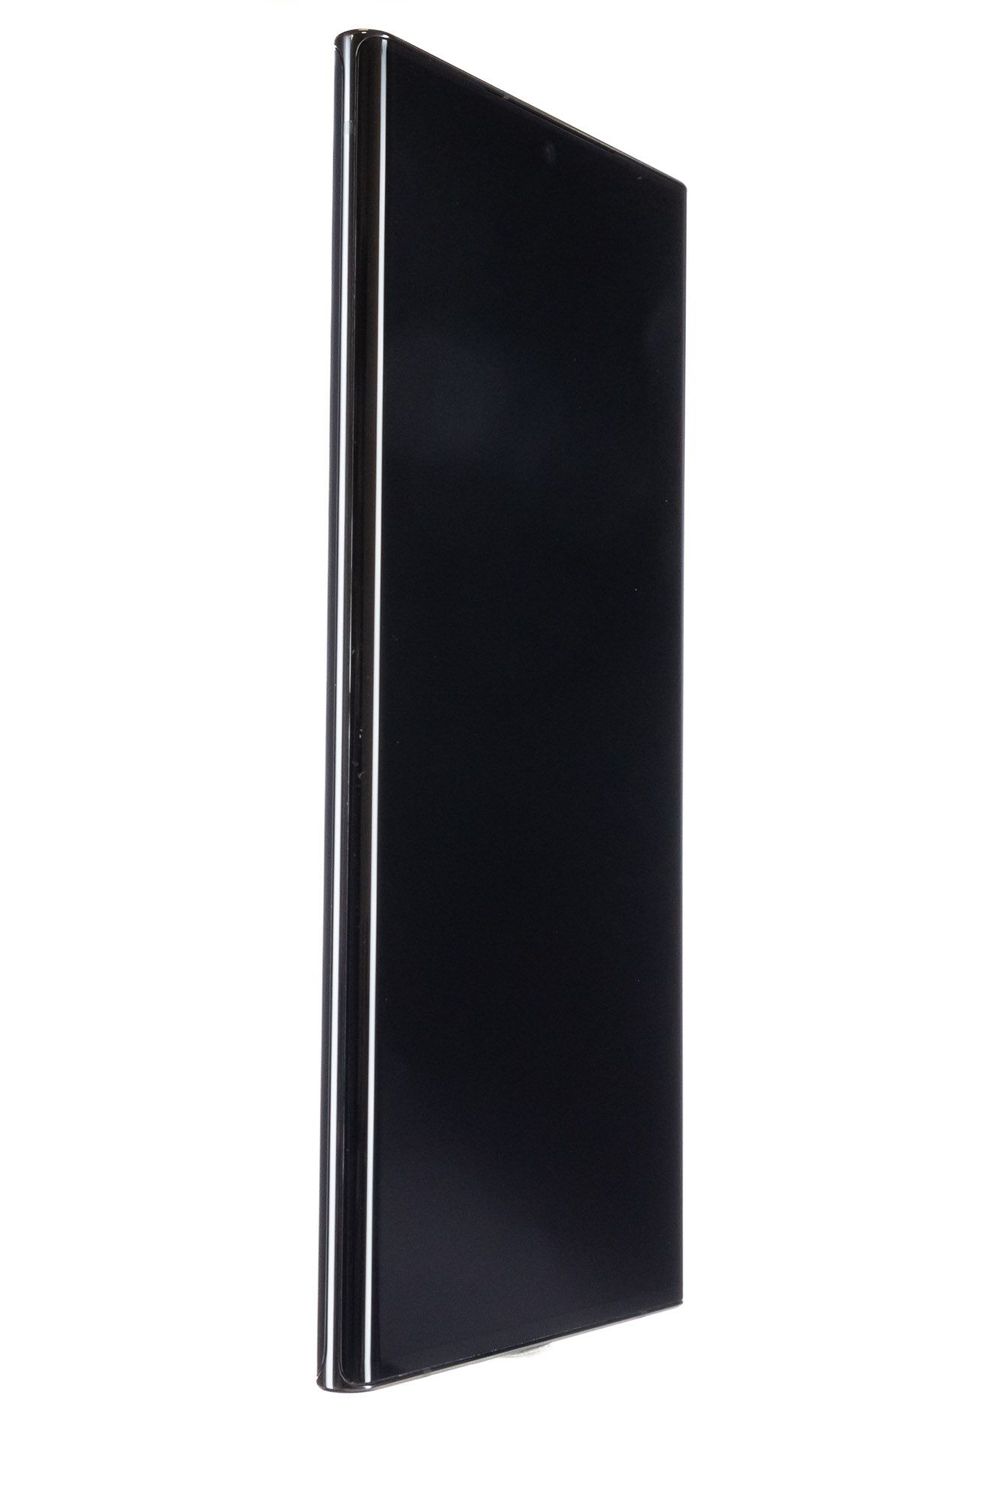 Telefon mobil Samsung Galaxy Note 20 Ultra Dual Sim, Black, 512 GB, Foarte Bun